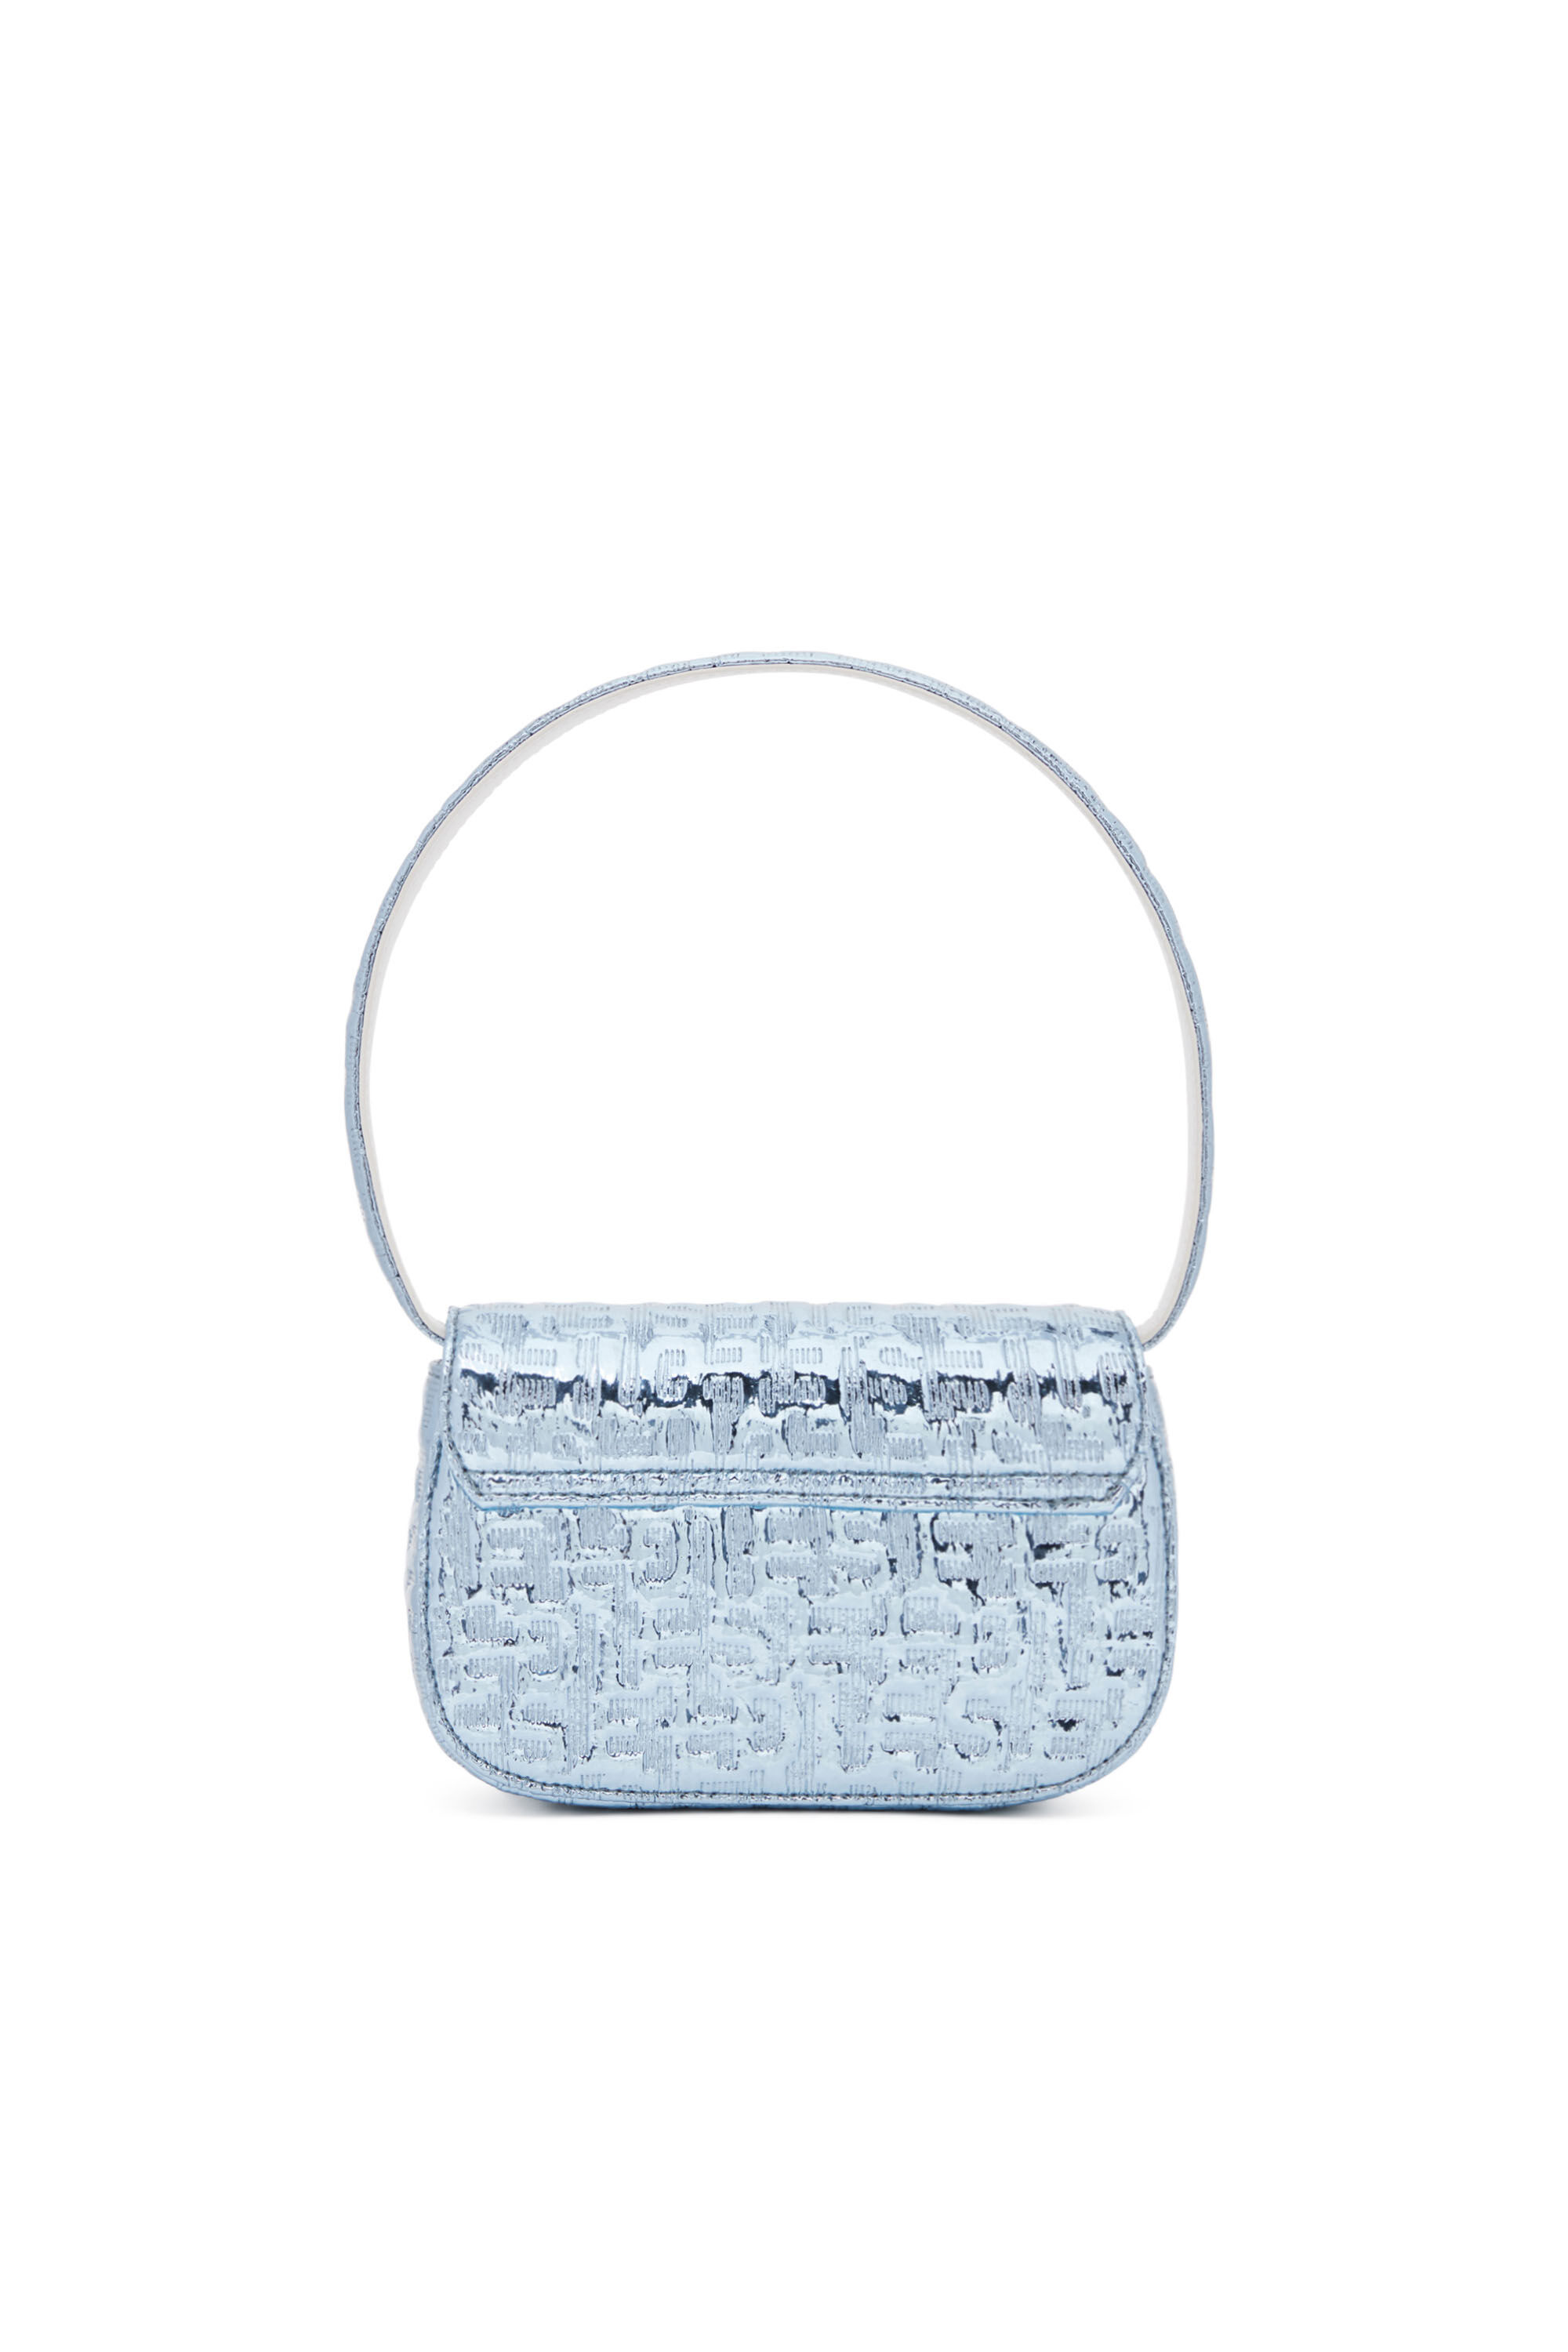 Women's Iconic shoulder bag with metallic monogram | Blue | Diesel